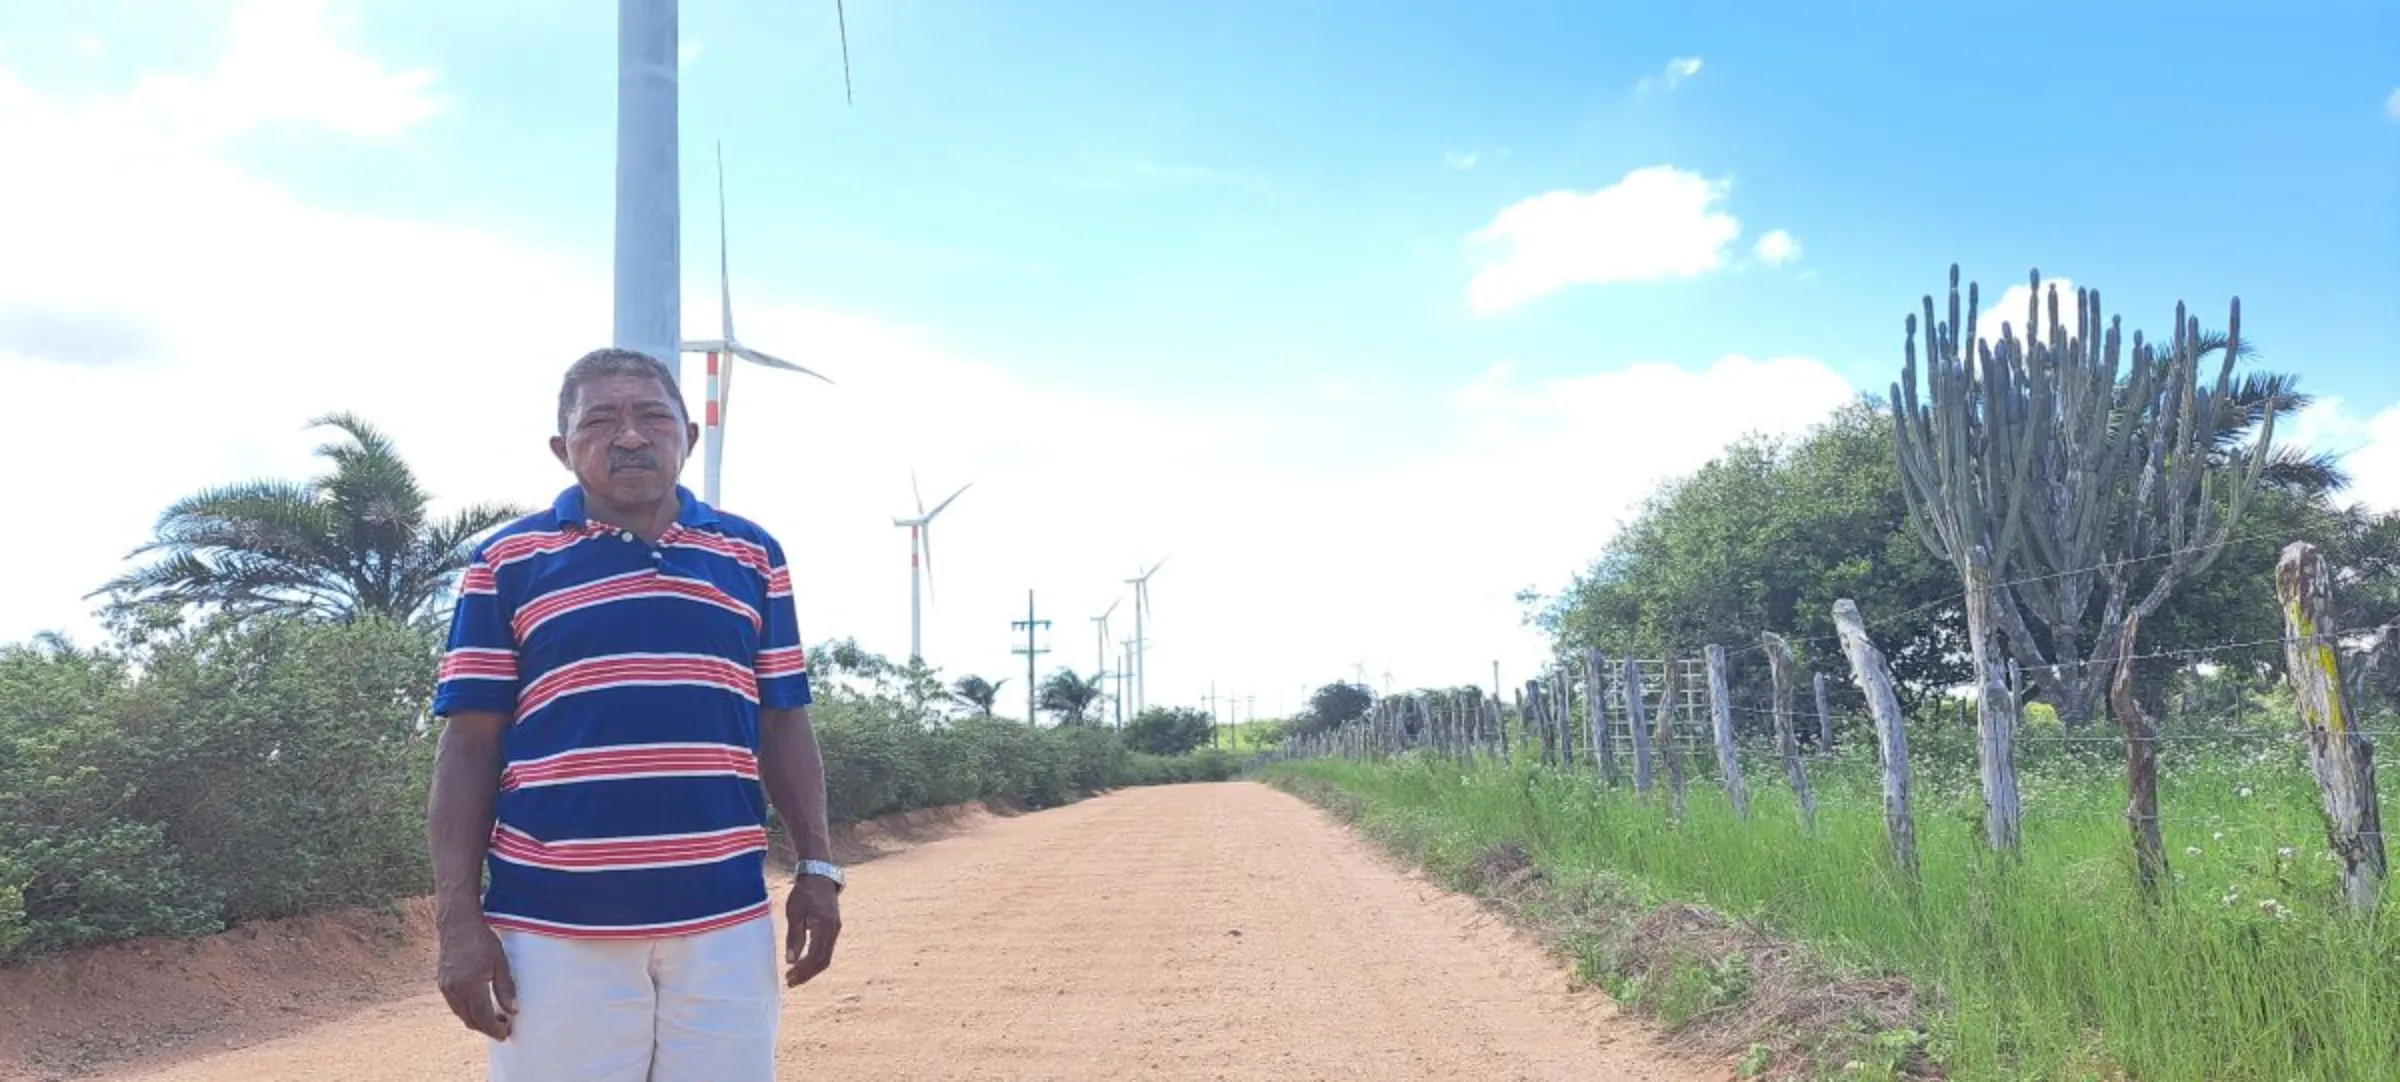 Antonio Domingos da Silva, an indigenous leader from Baixa do Lero, a Pankararu village, poses for a picture besides wind towers near his land in Pernambuco, Brazil, May 12, 2023. Fabio Teixeira/Thomson Reuters Foundation